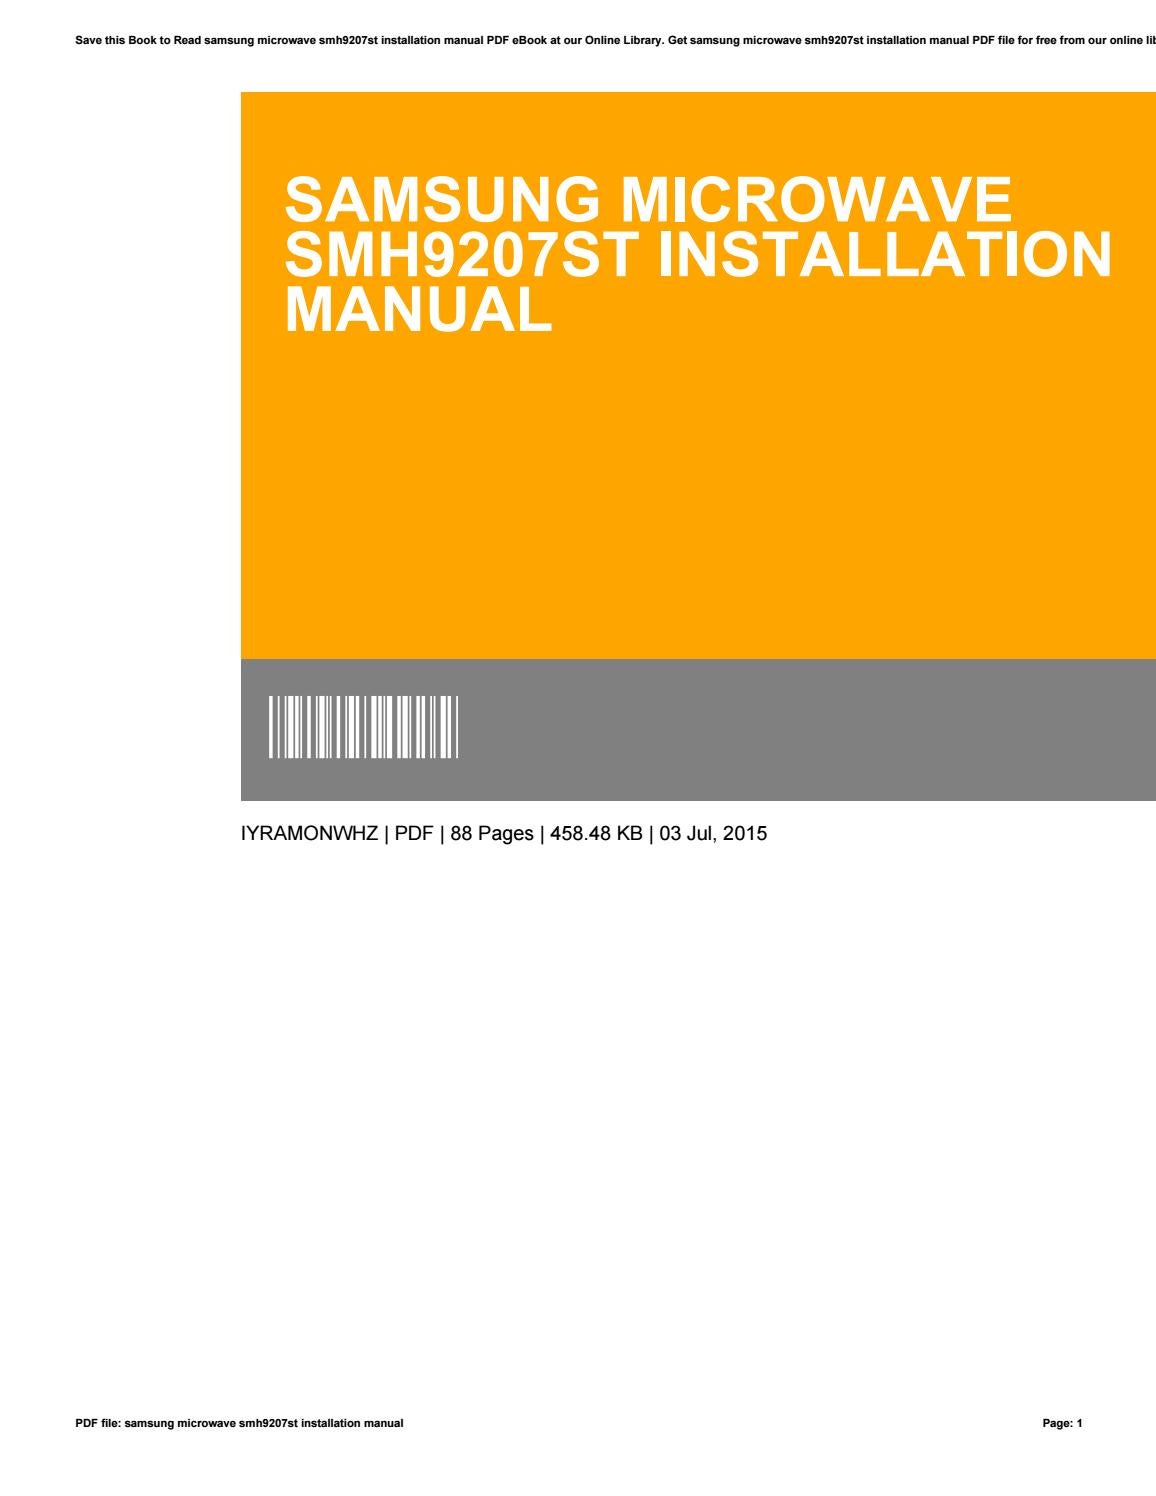 samsung ua50mu6100sxnz installation manual